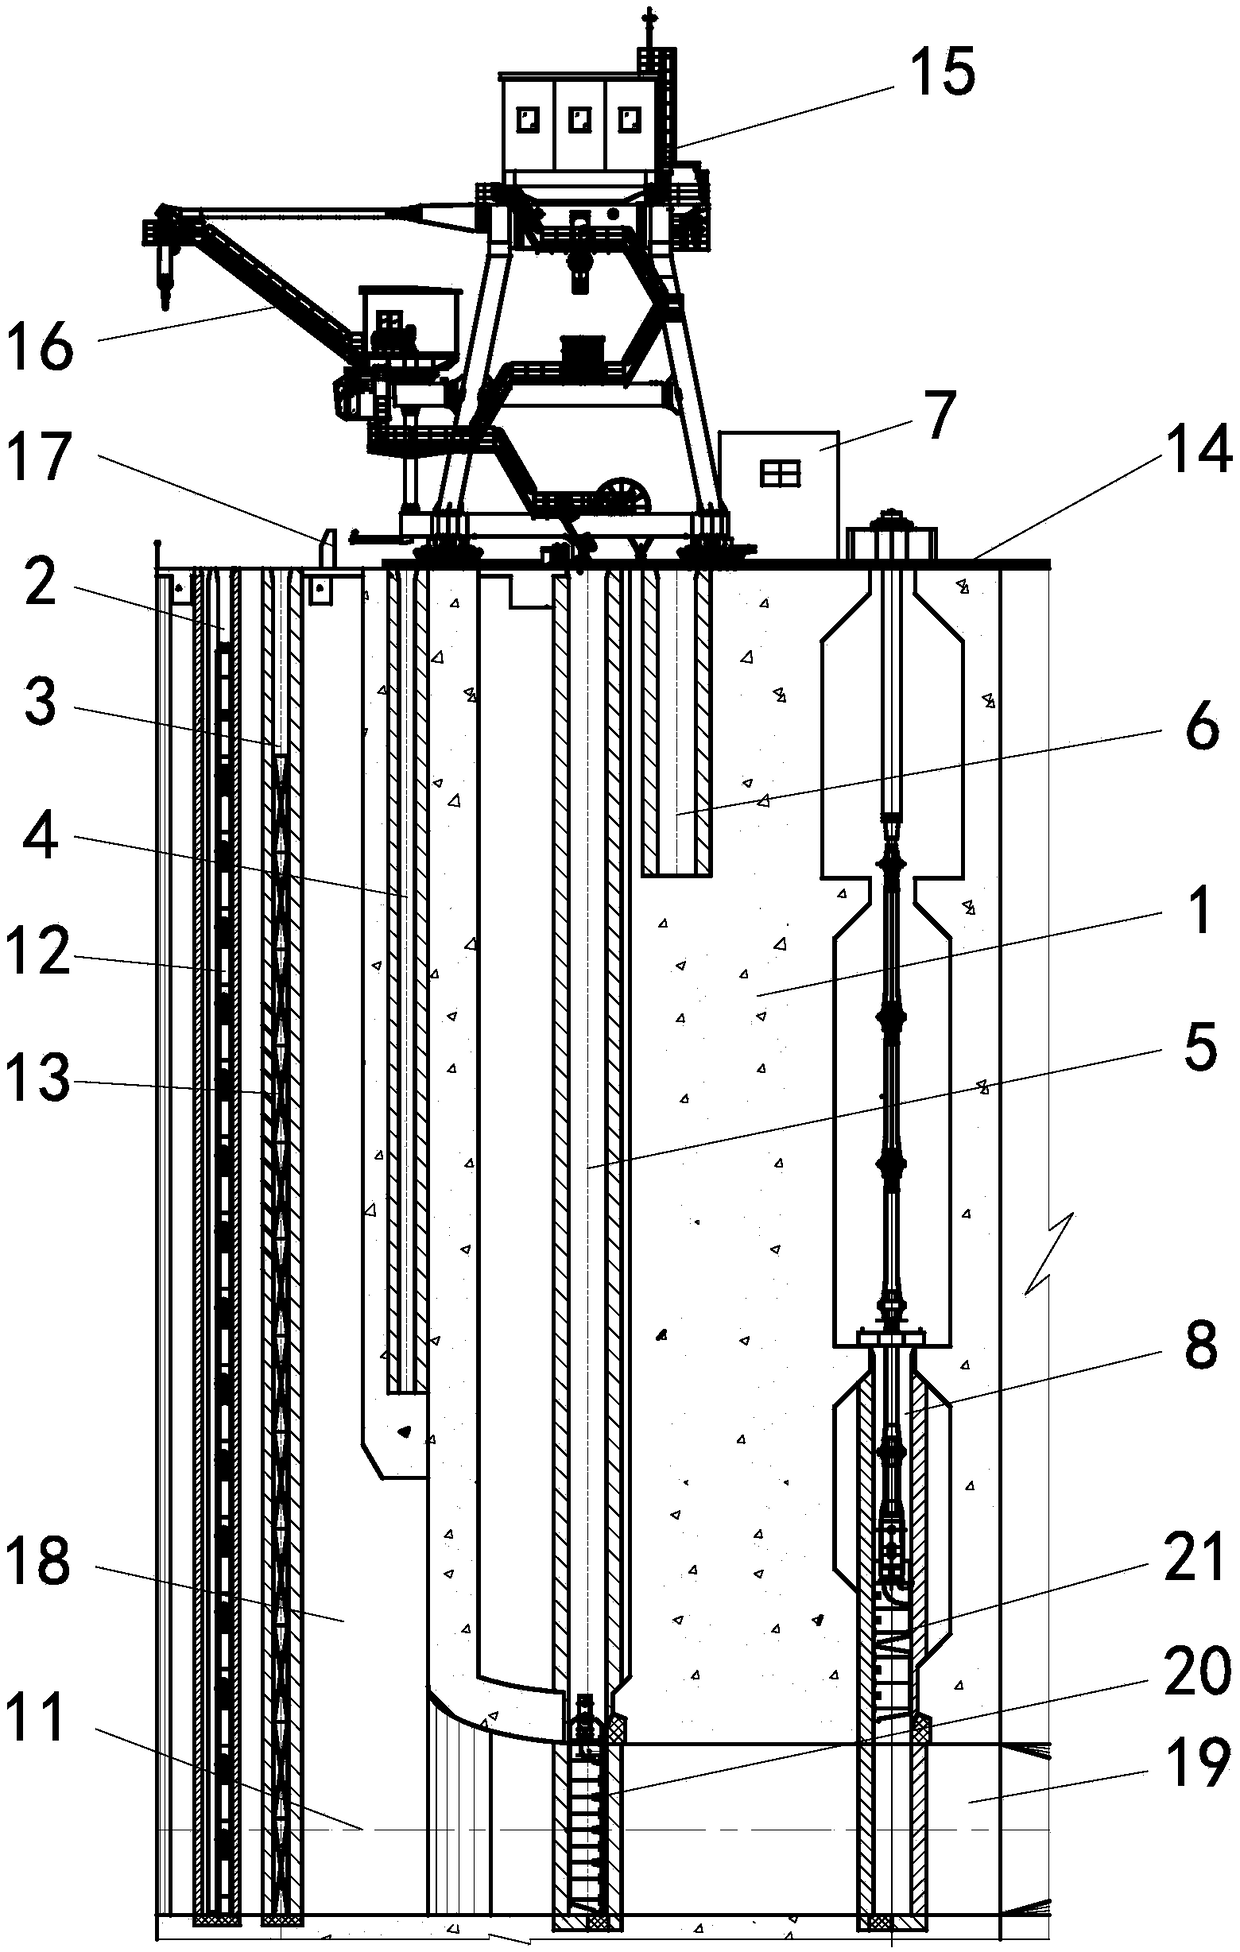 Single-diversion-tunnel water-power engineering hoist arrangement structure